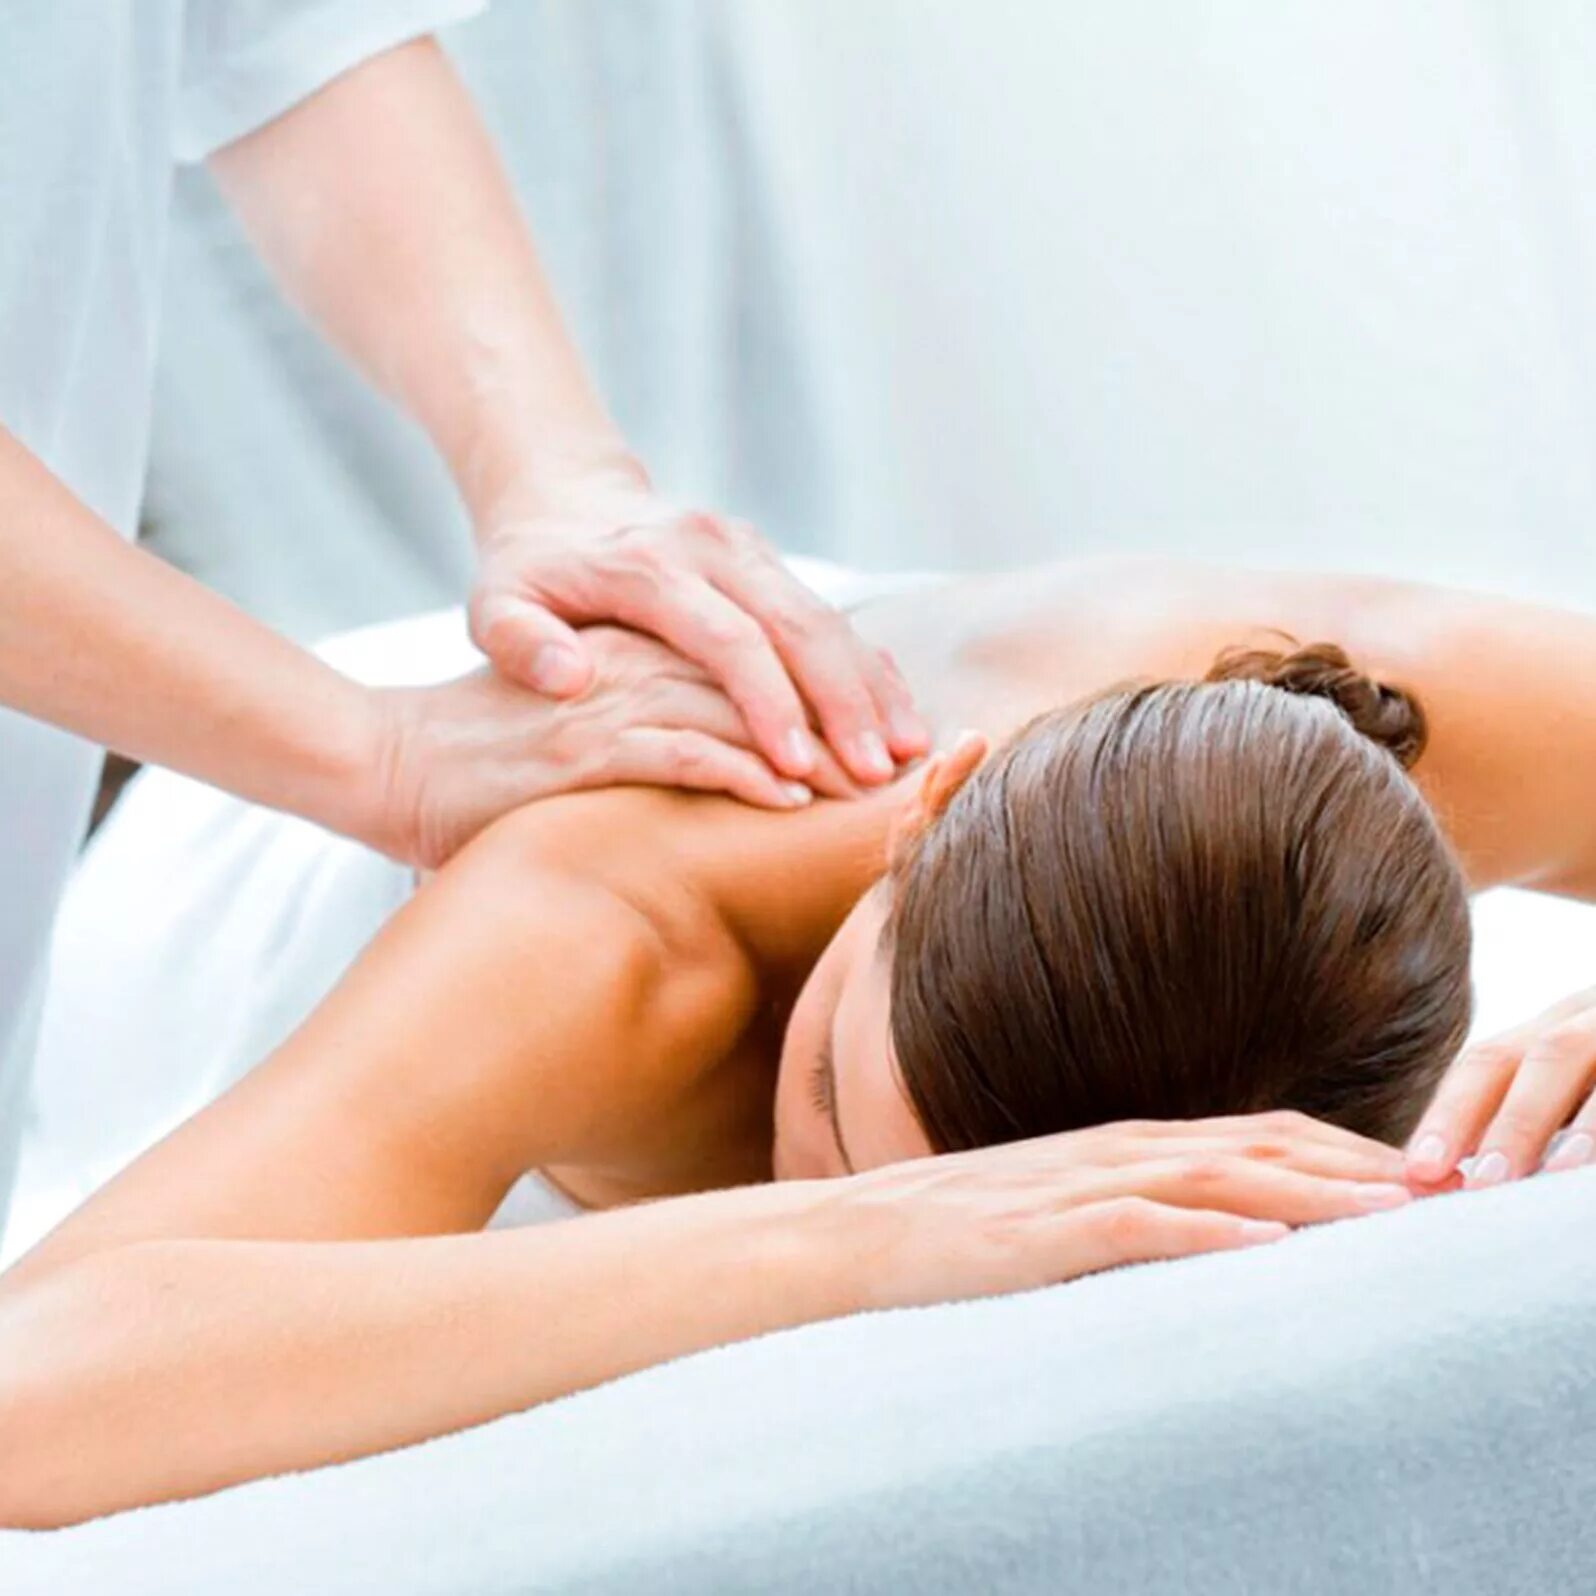 Massage o. Лечебный массаж. Лечебный массаж спины. Классический лечебный массаж. Общий массаж тела.